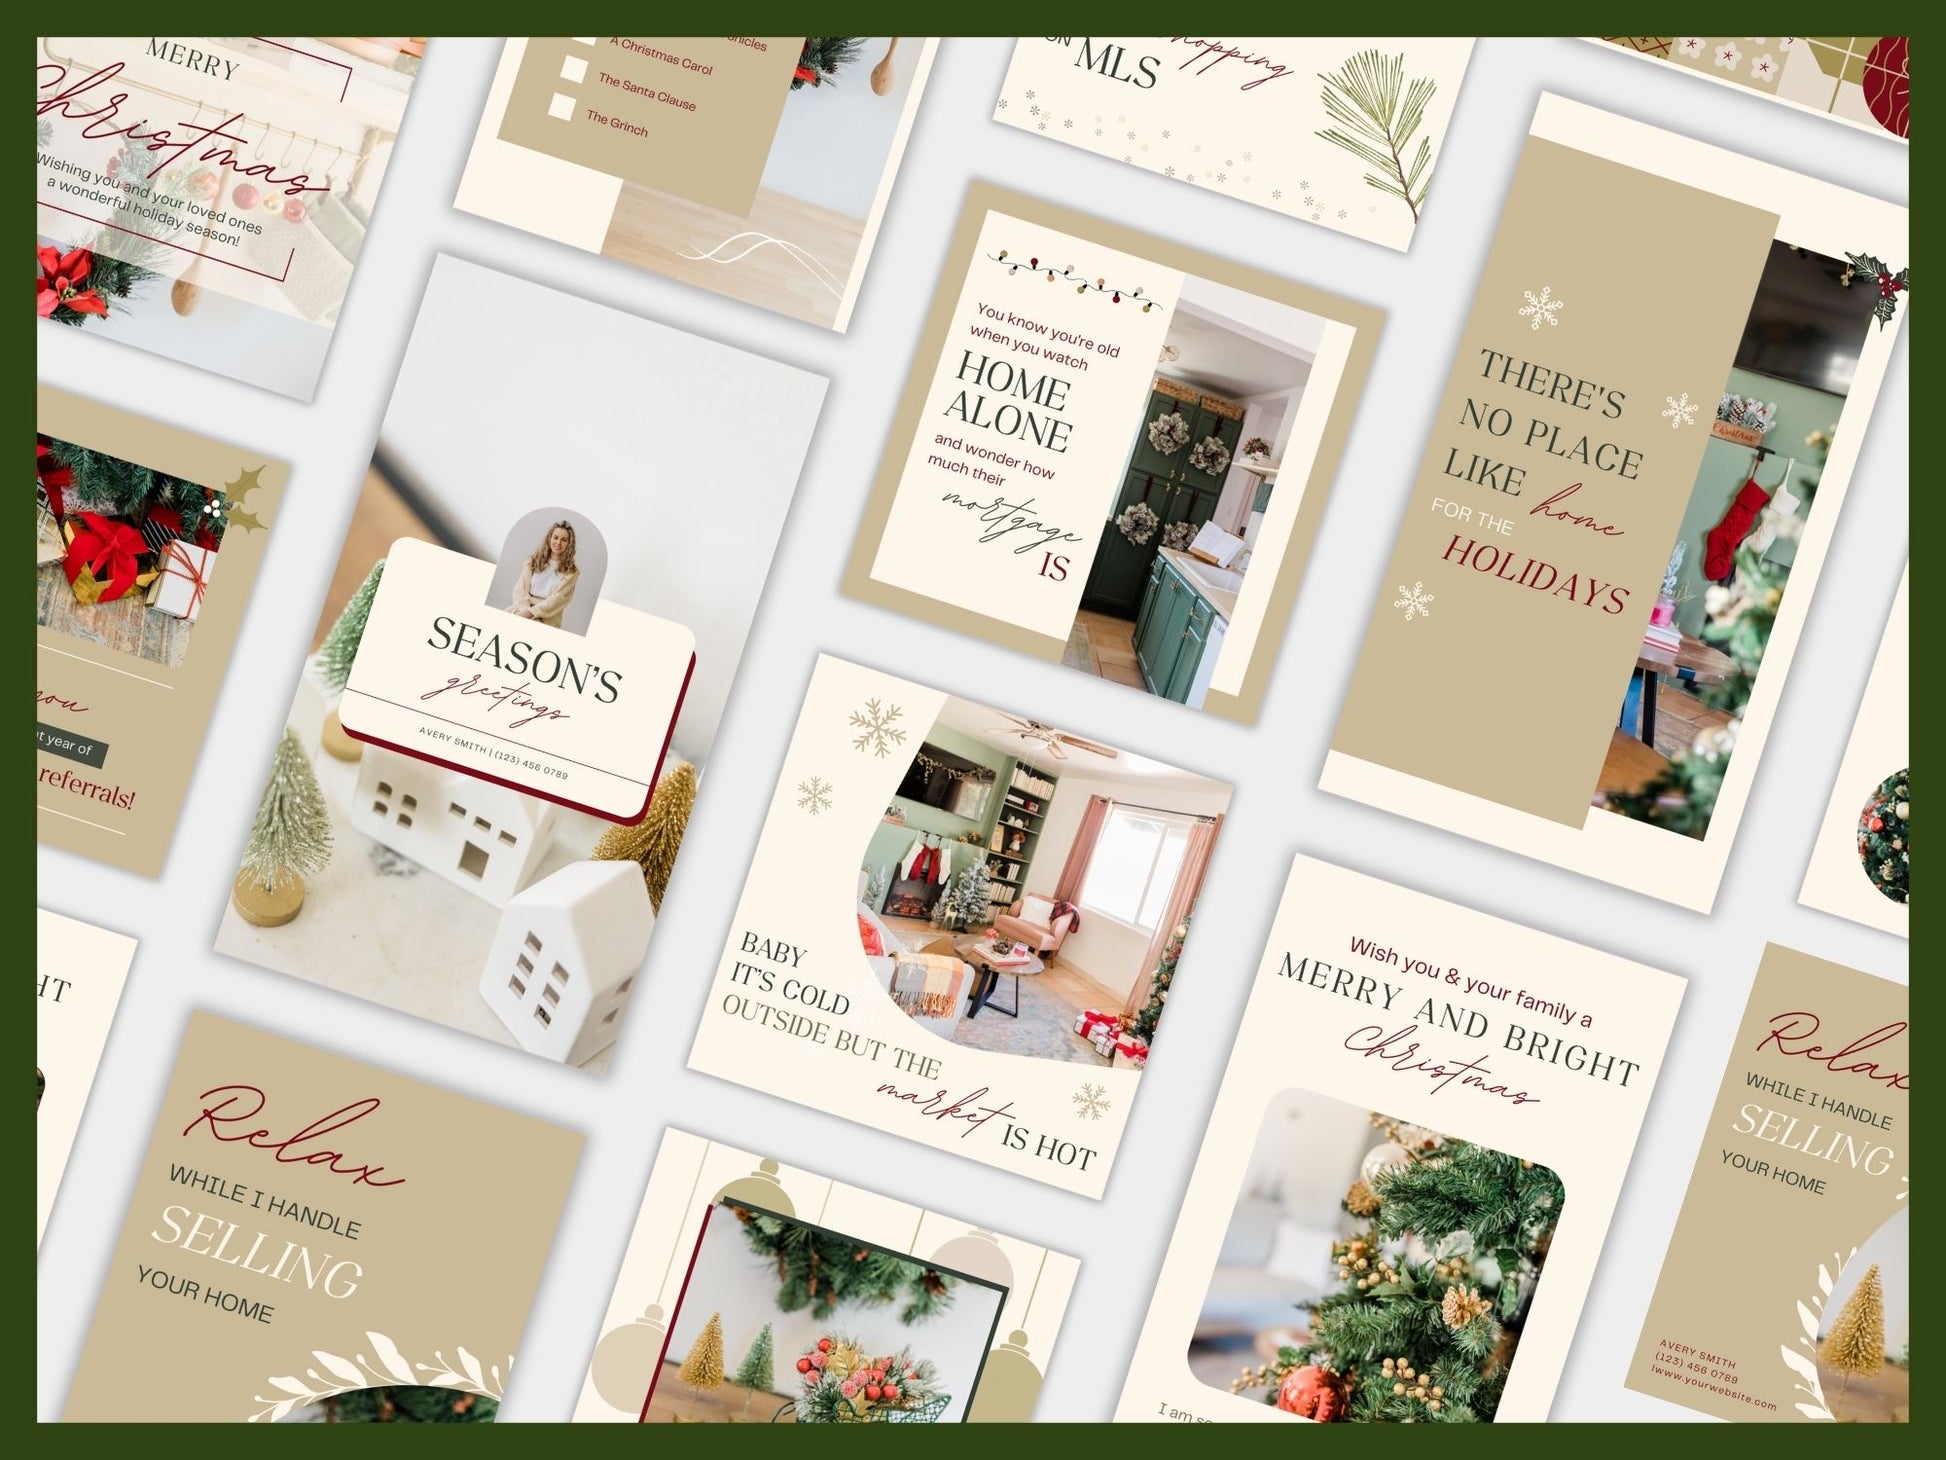 Real Estate Christmas Social Media Posts - Festive Social Media Engagement for the Holiday Season